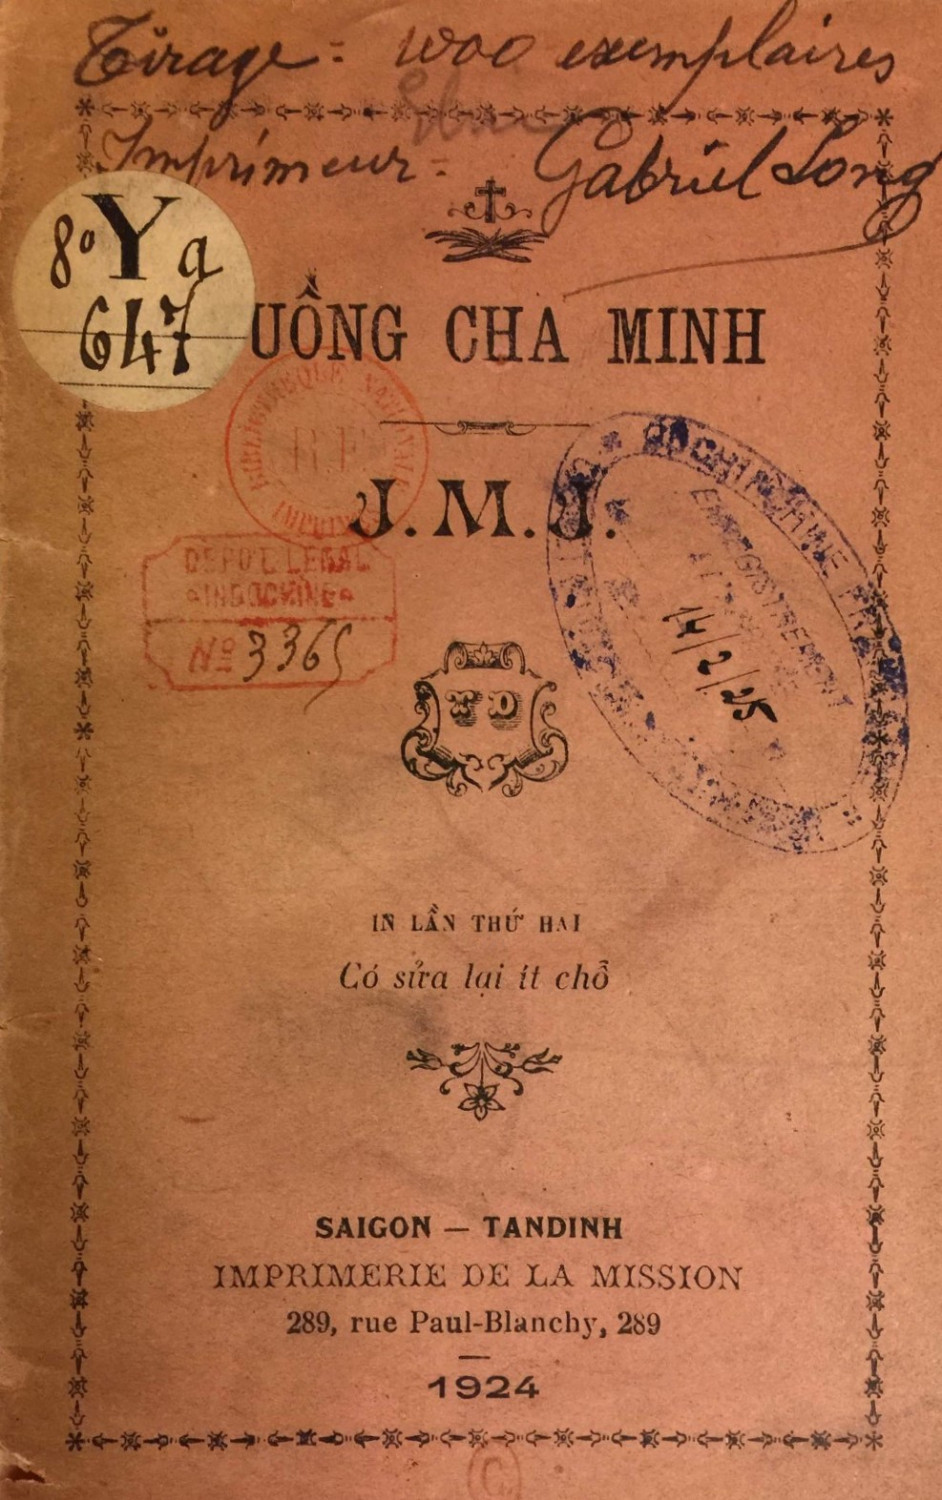 Tuong cha Minh